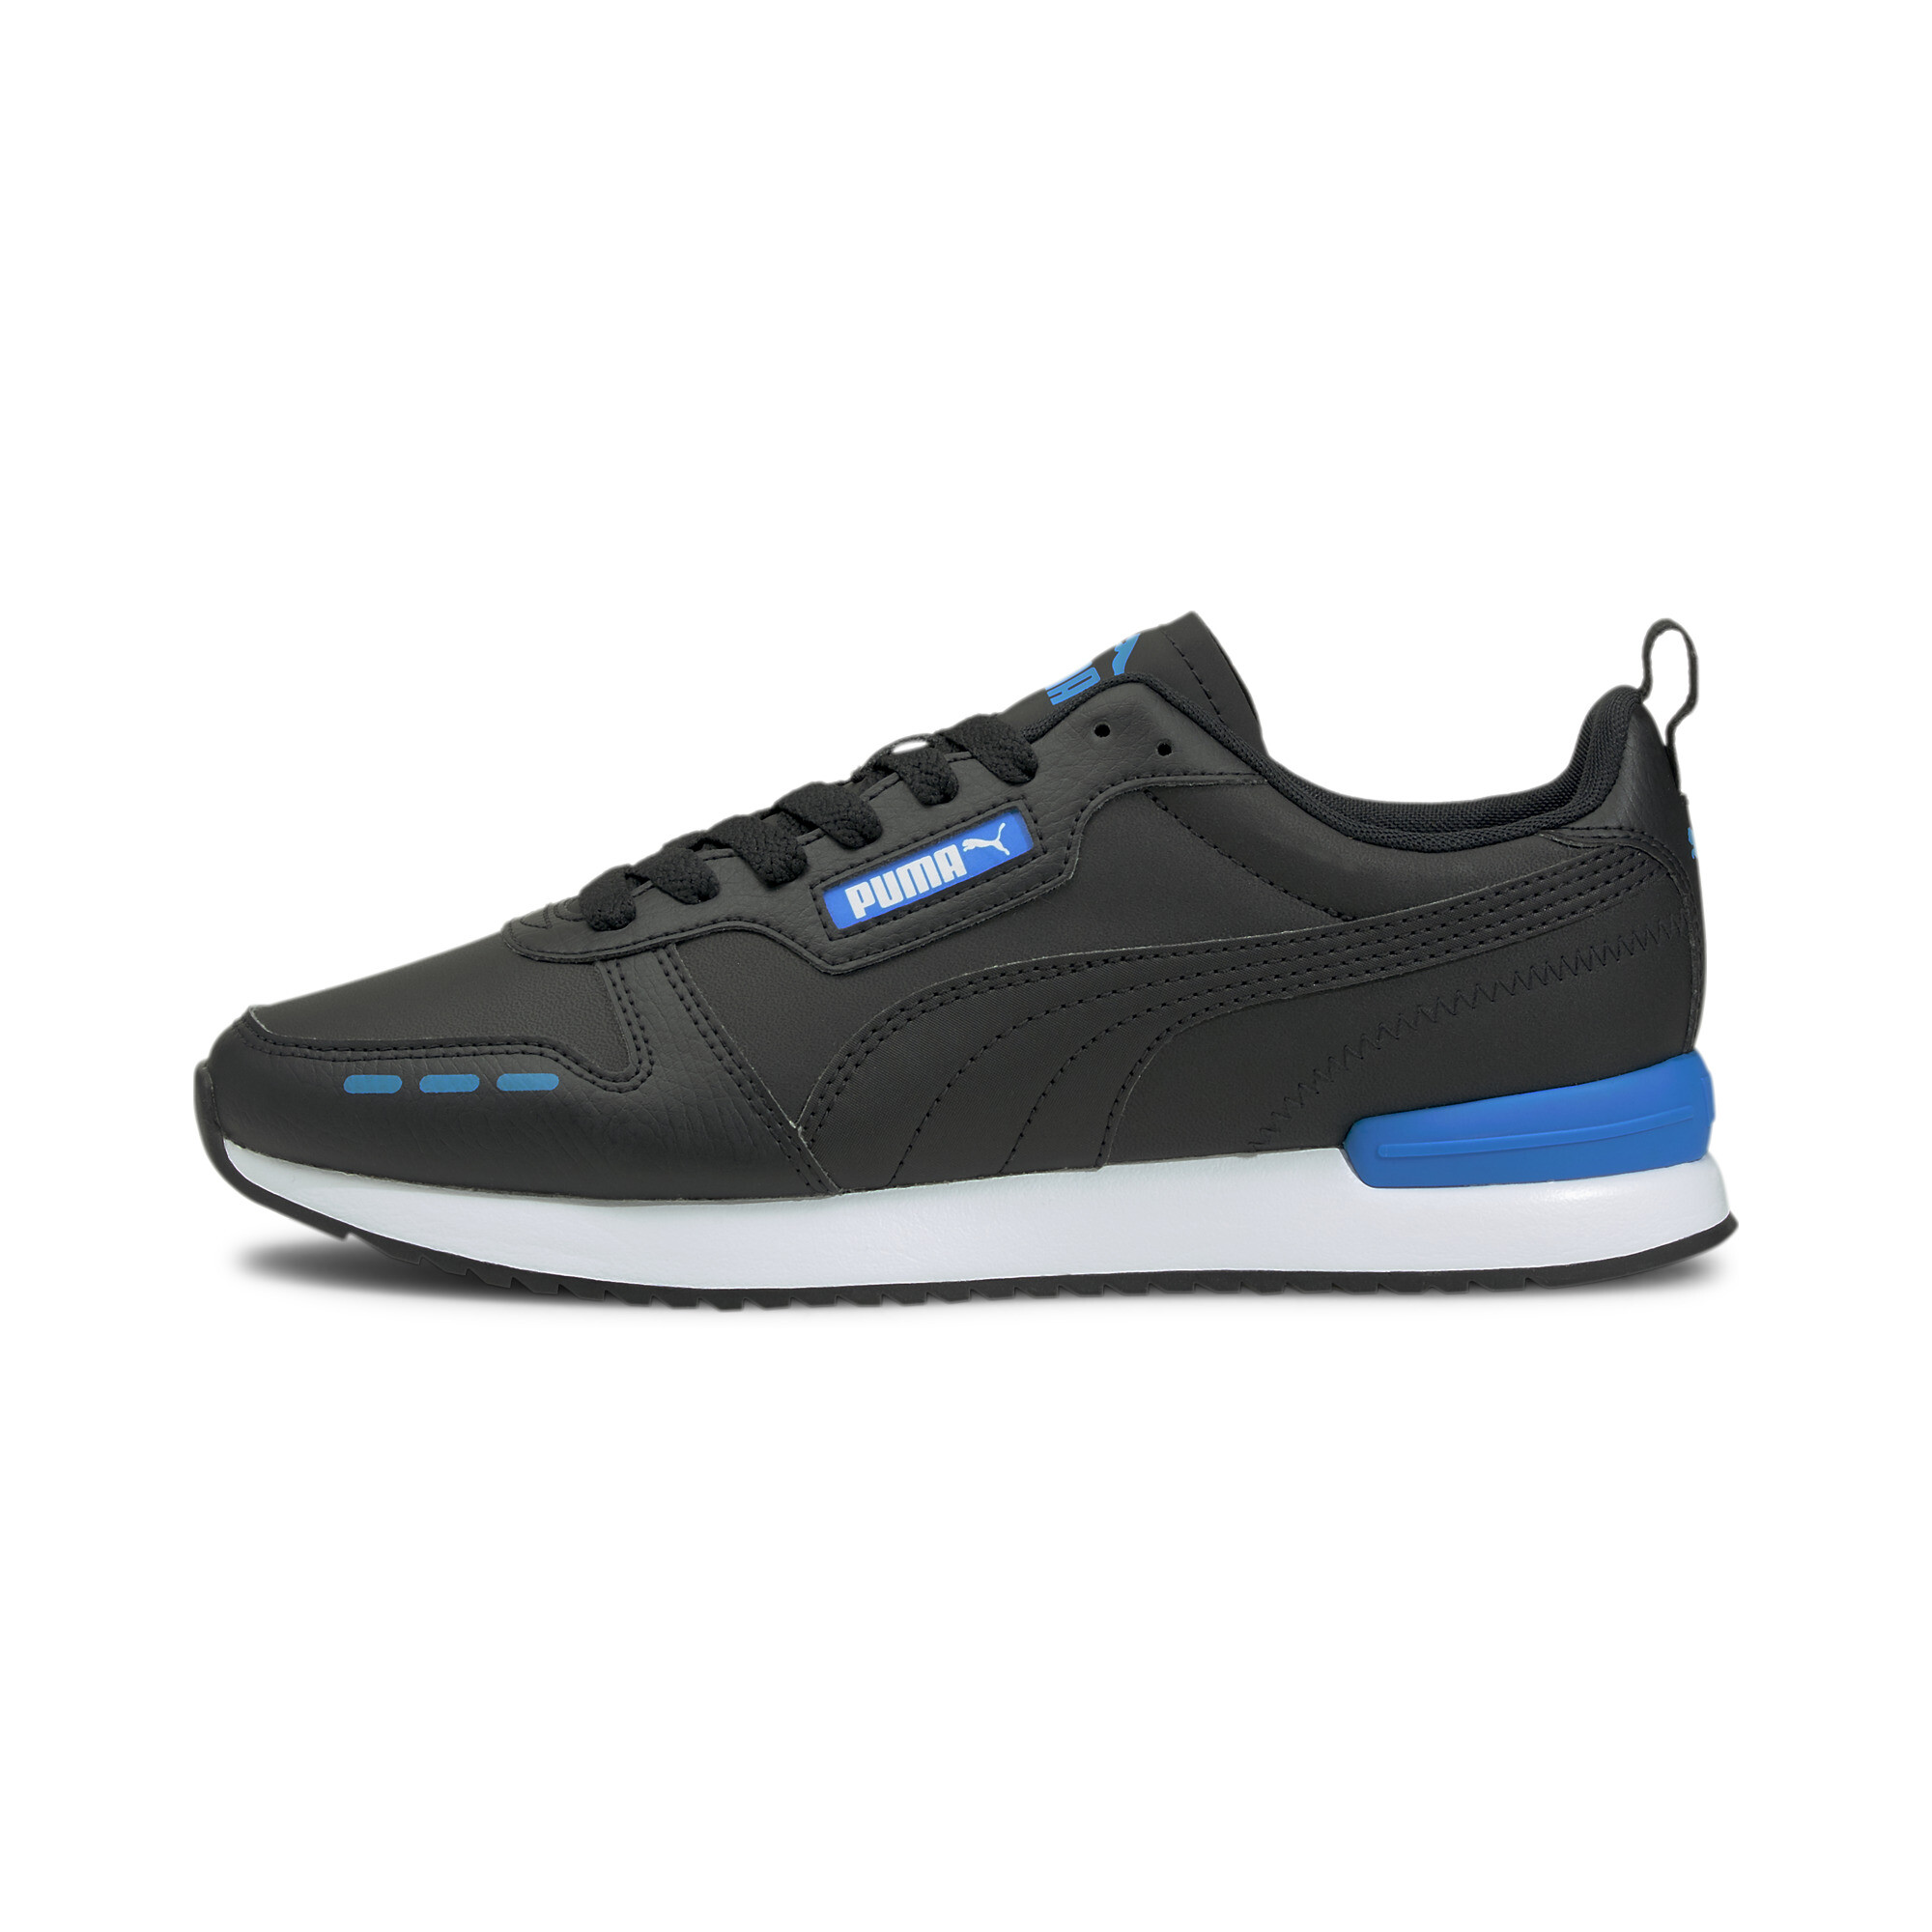 Indexbild 28 - PUMA R78 Sneaker Unisex Schuhe Basics Neu